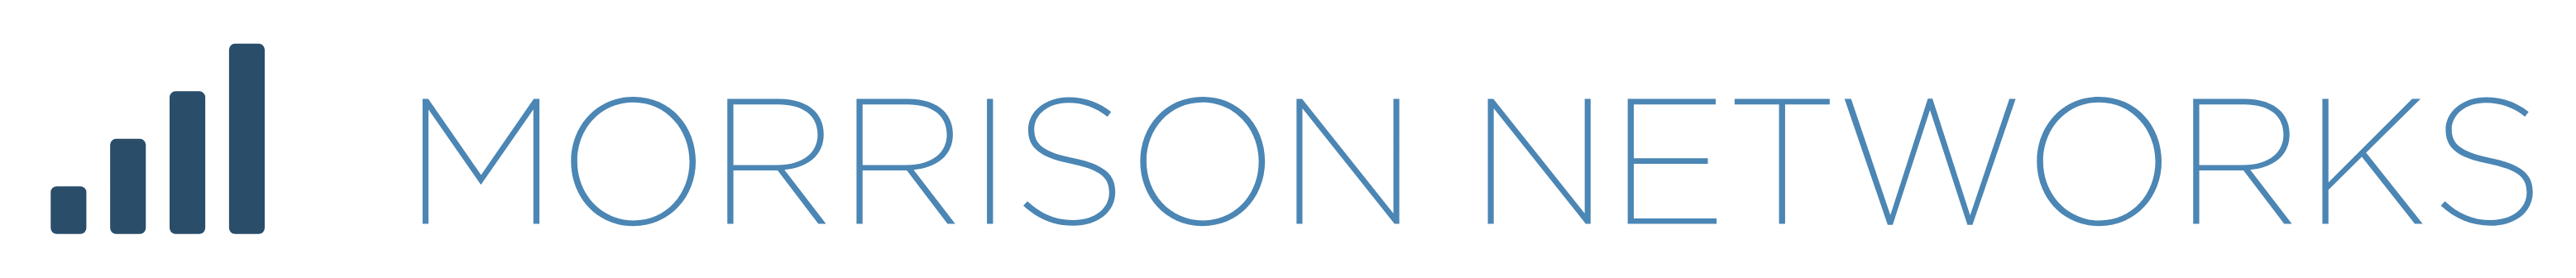 Morrison Networks logo